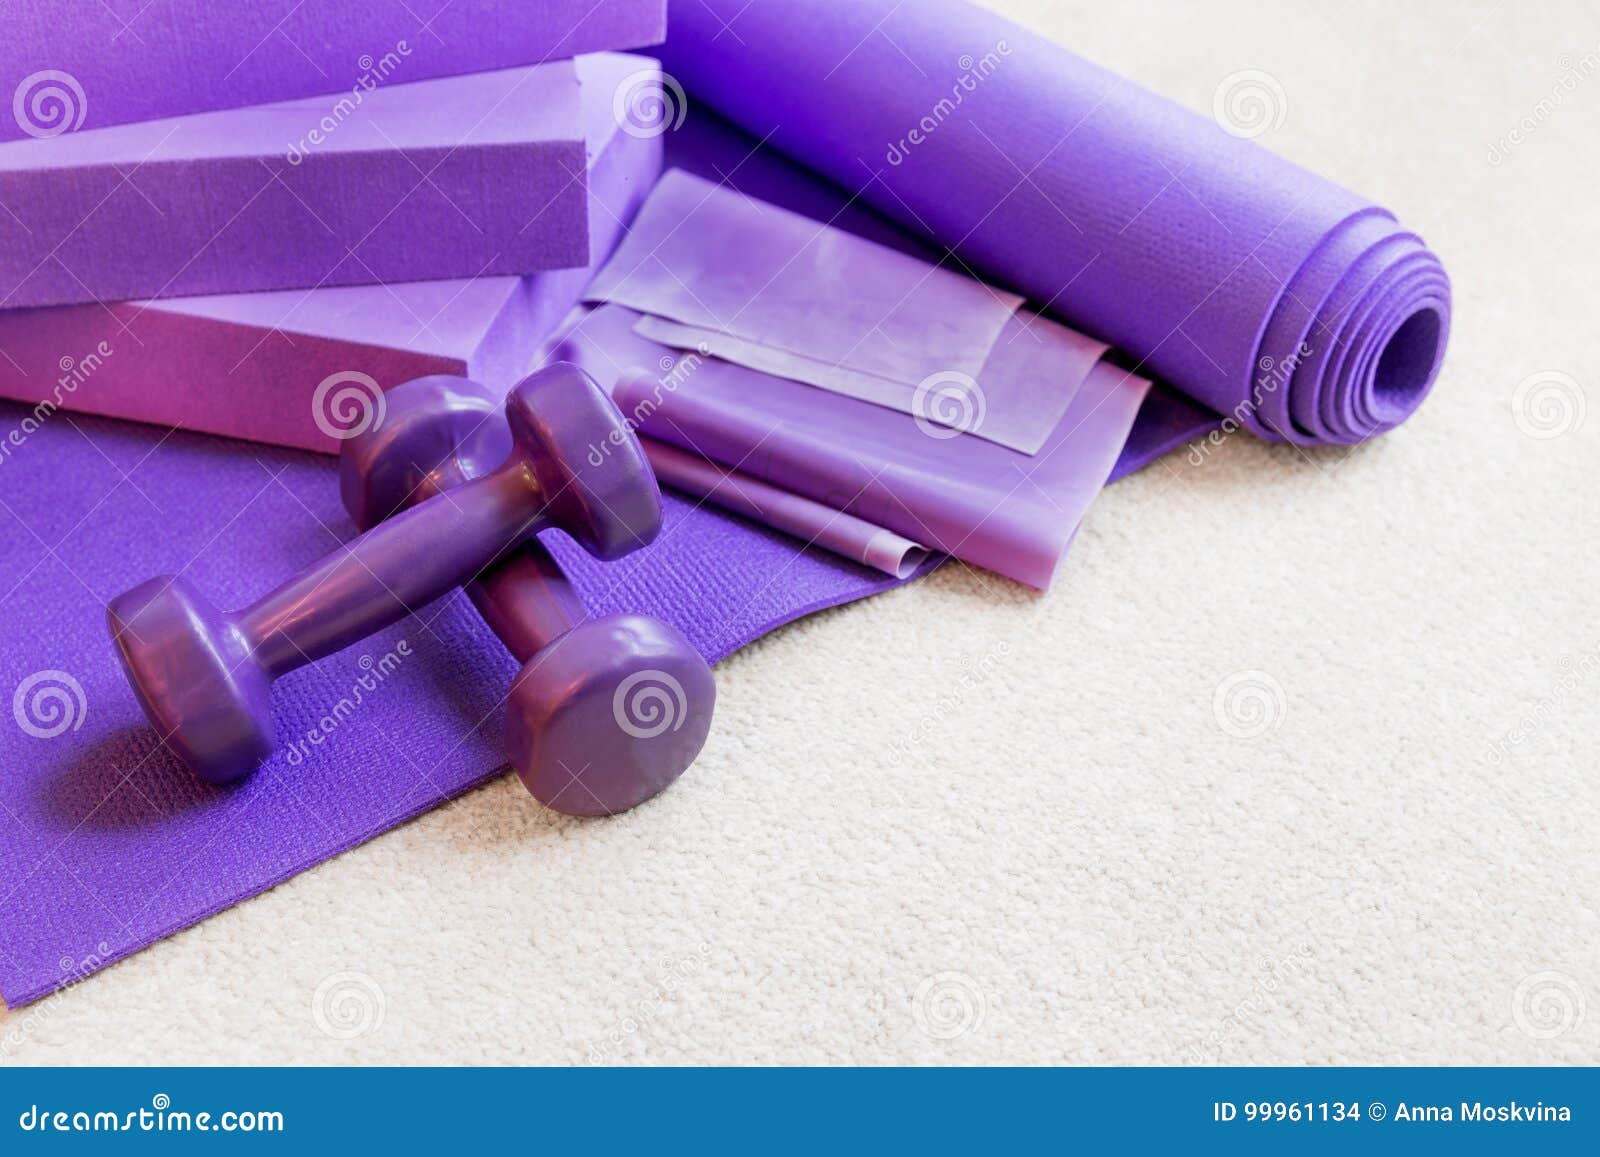 Fitness Yoga Pilates Equipment Props on Carpet Stock Photo - Image of ...